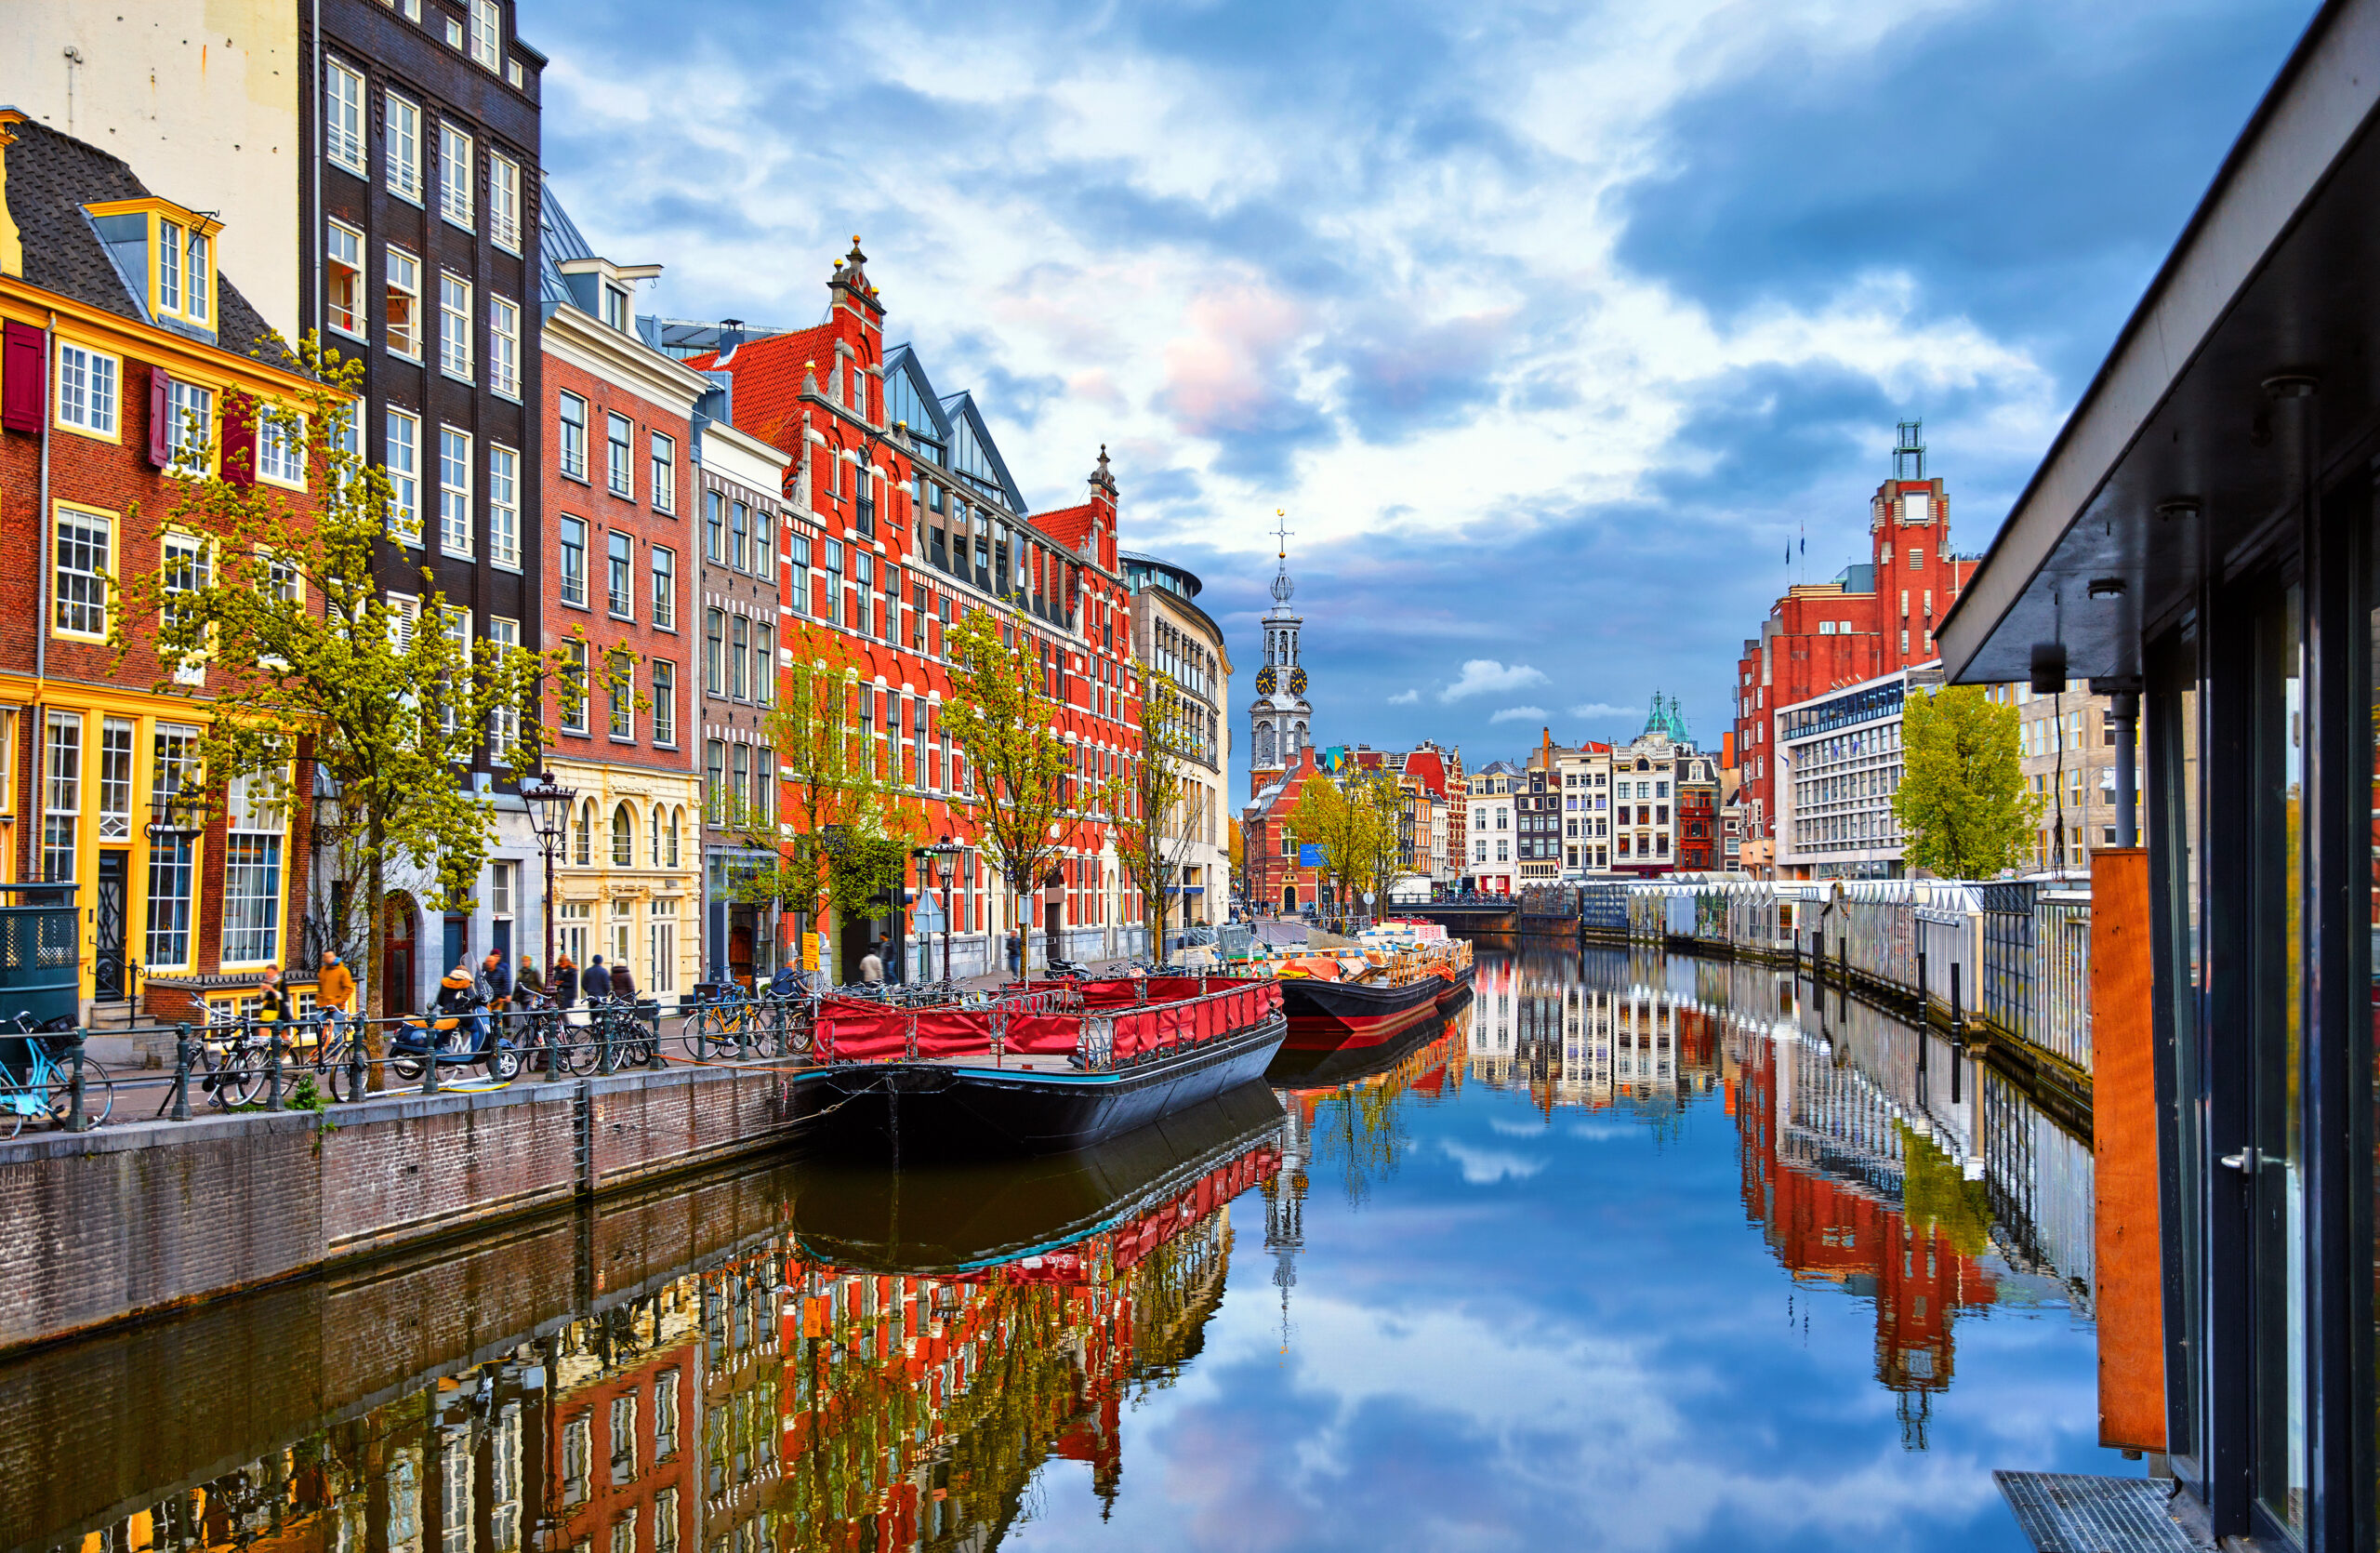 Channel,In,Amsterdam,Netherlands,Houses,River,Amstel,Landmark,Old,European